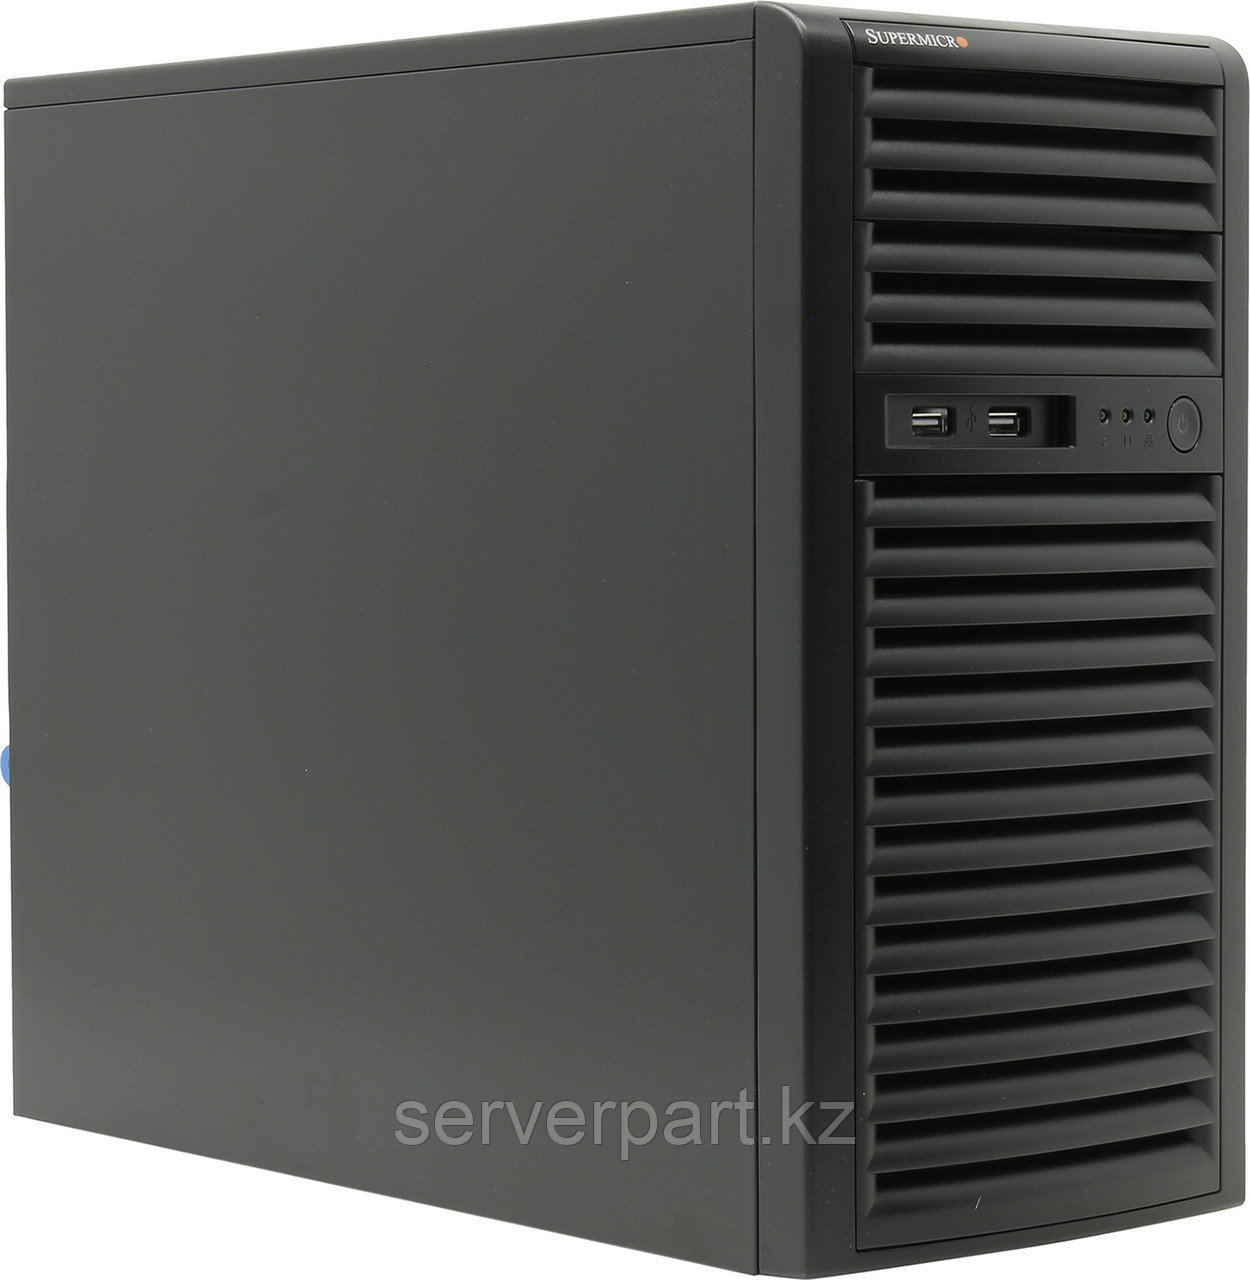 Сервер Supermicro 5039D Tower/4-core intel xeon E3-1220v6 3GHz/48GB UDIMM nECC/1x240GB SSD MU Hyb